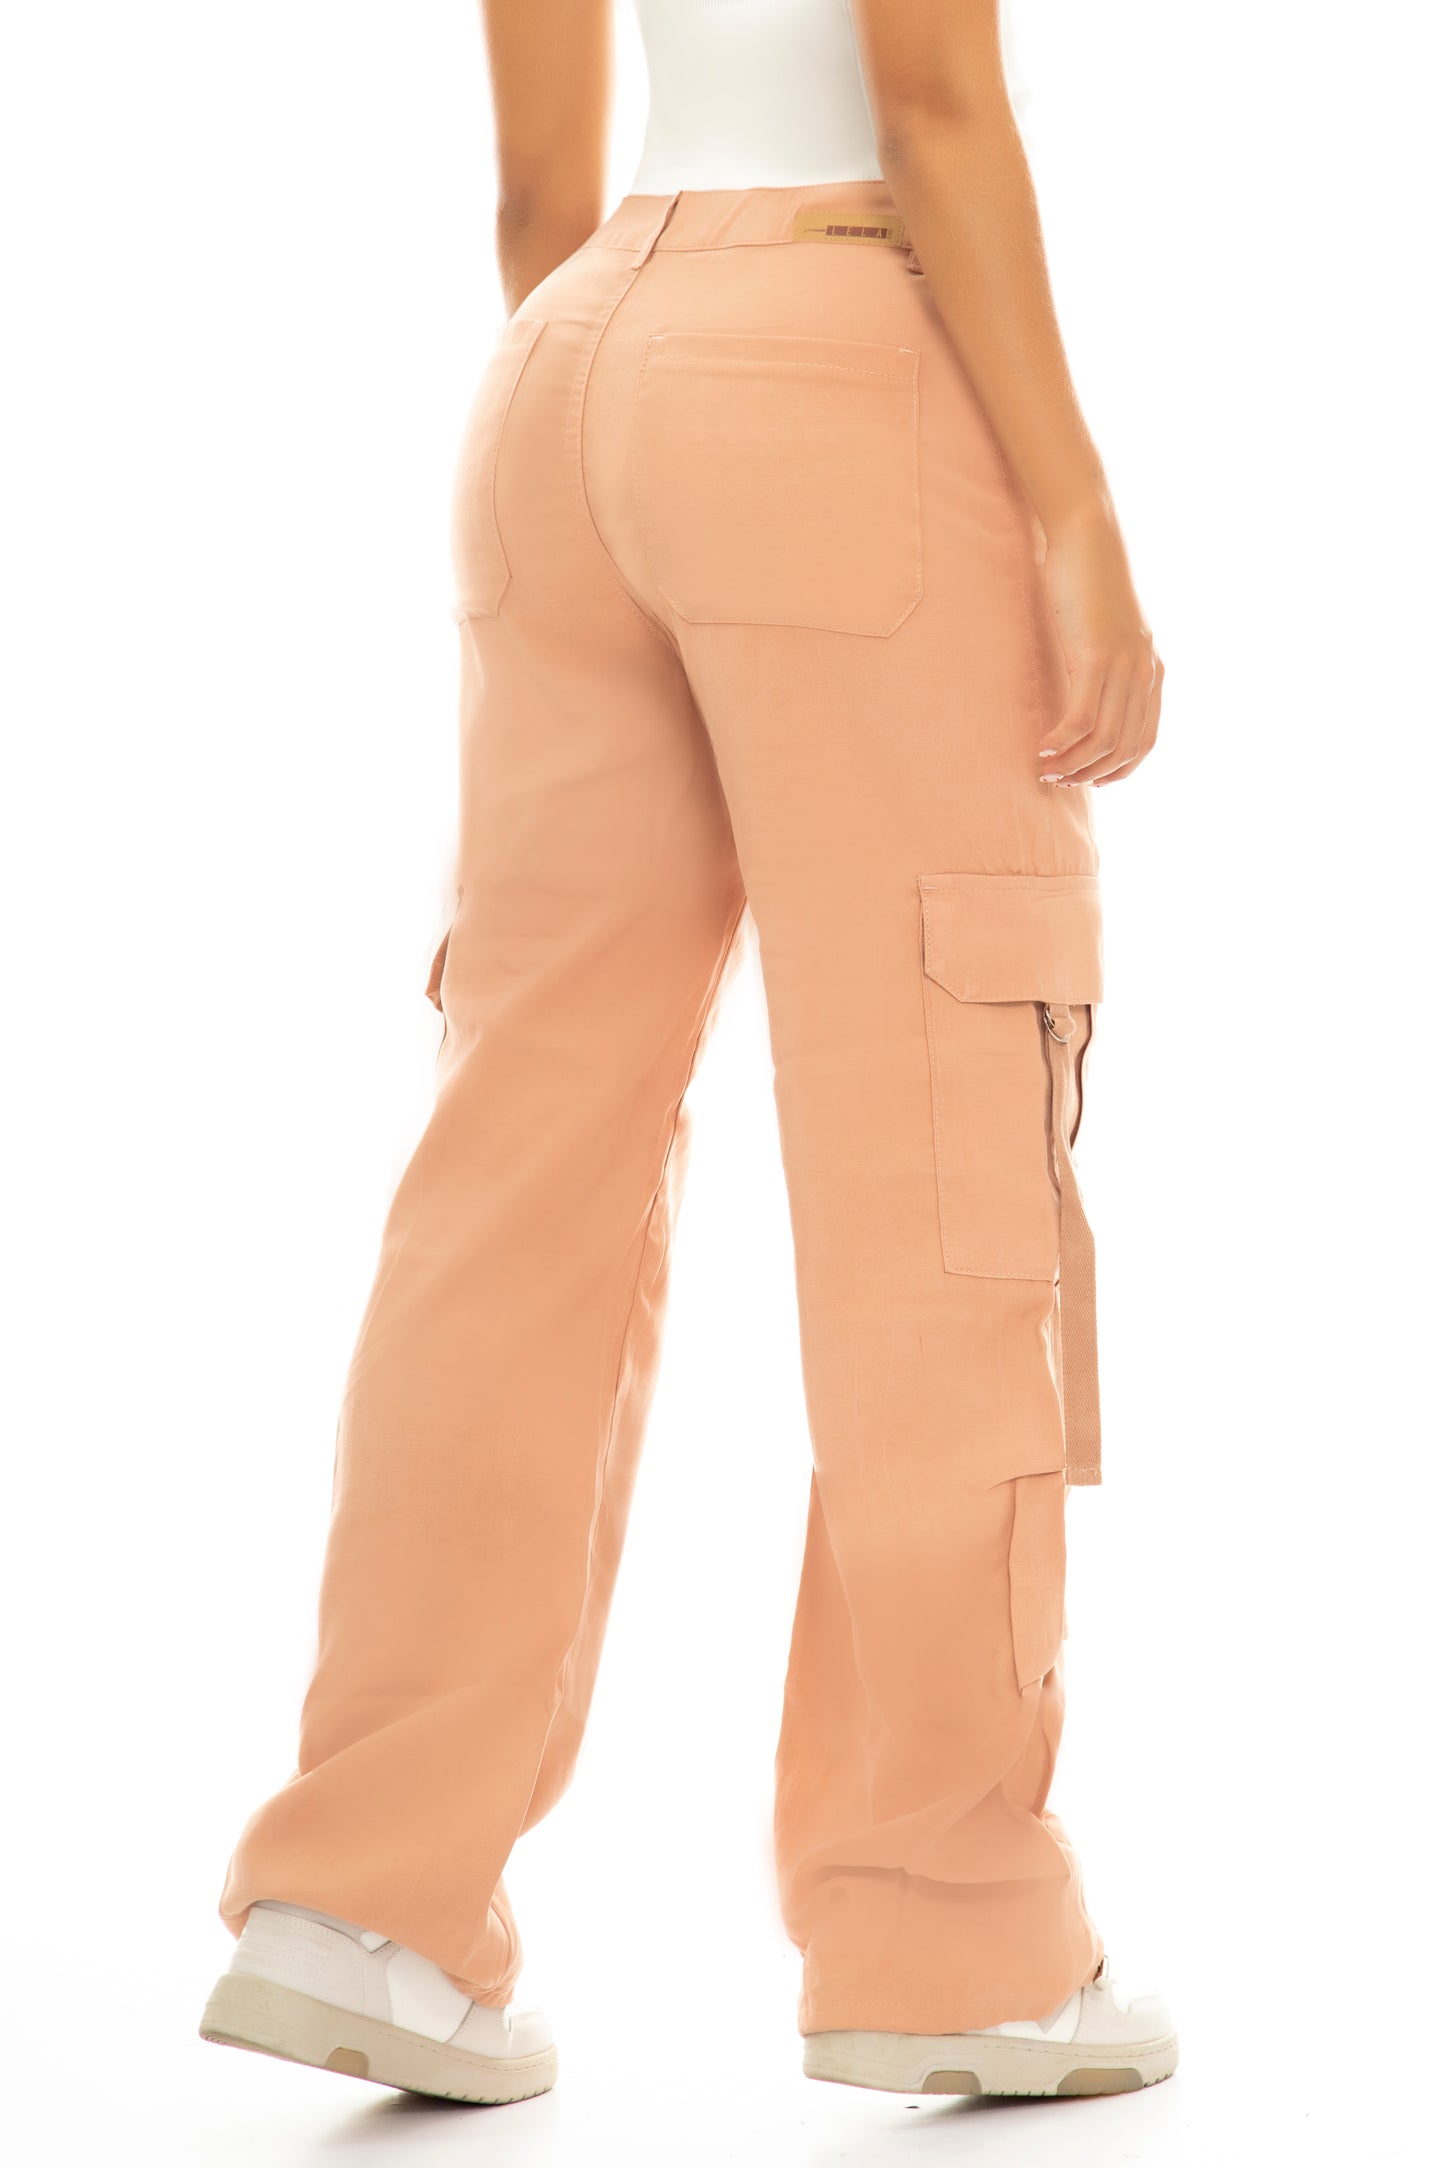 Ref 6169, Pantalon Straight leg Palazzo cargo, color salmón